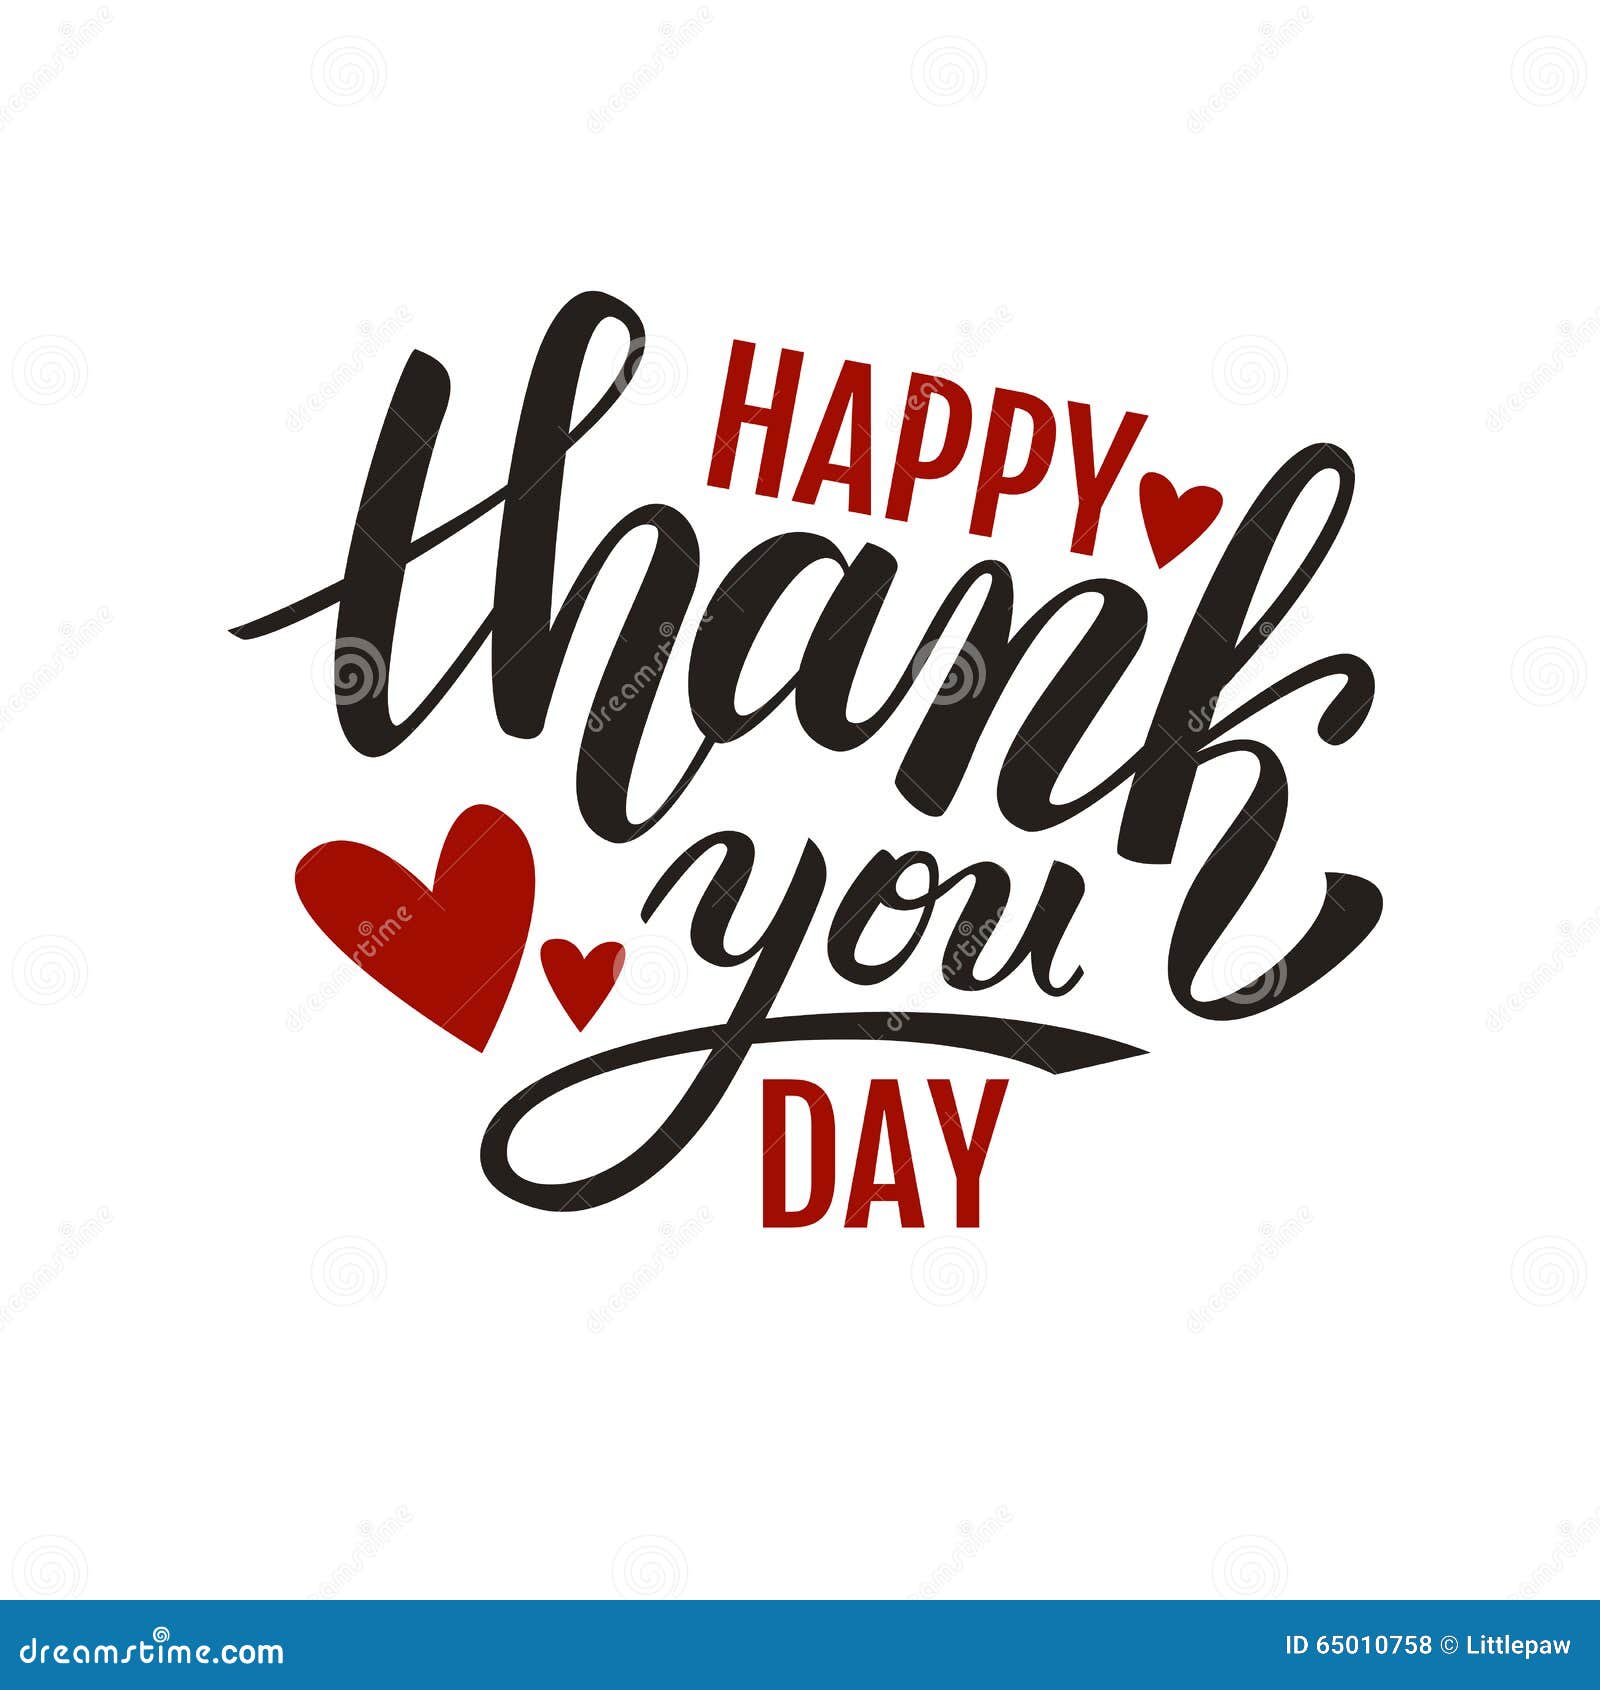 Happy Thank You Day Handwritten Vector Illustration